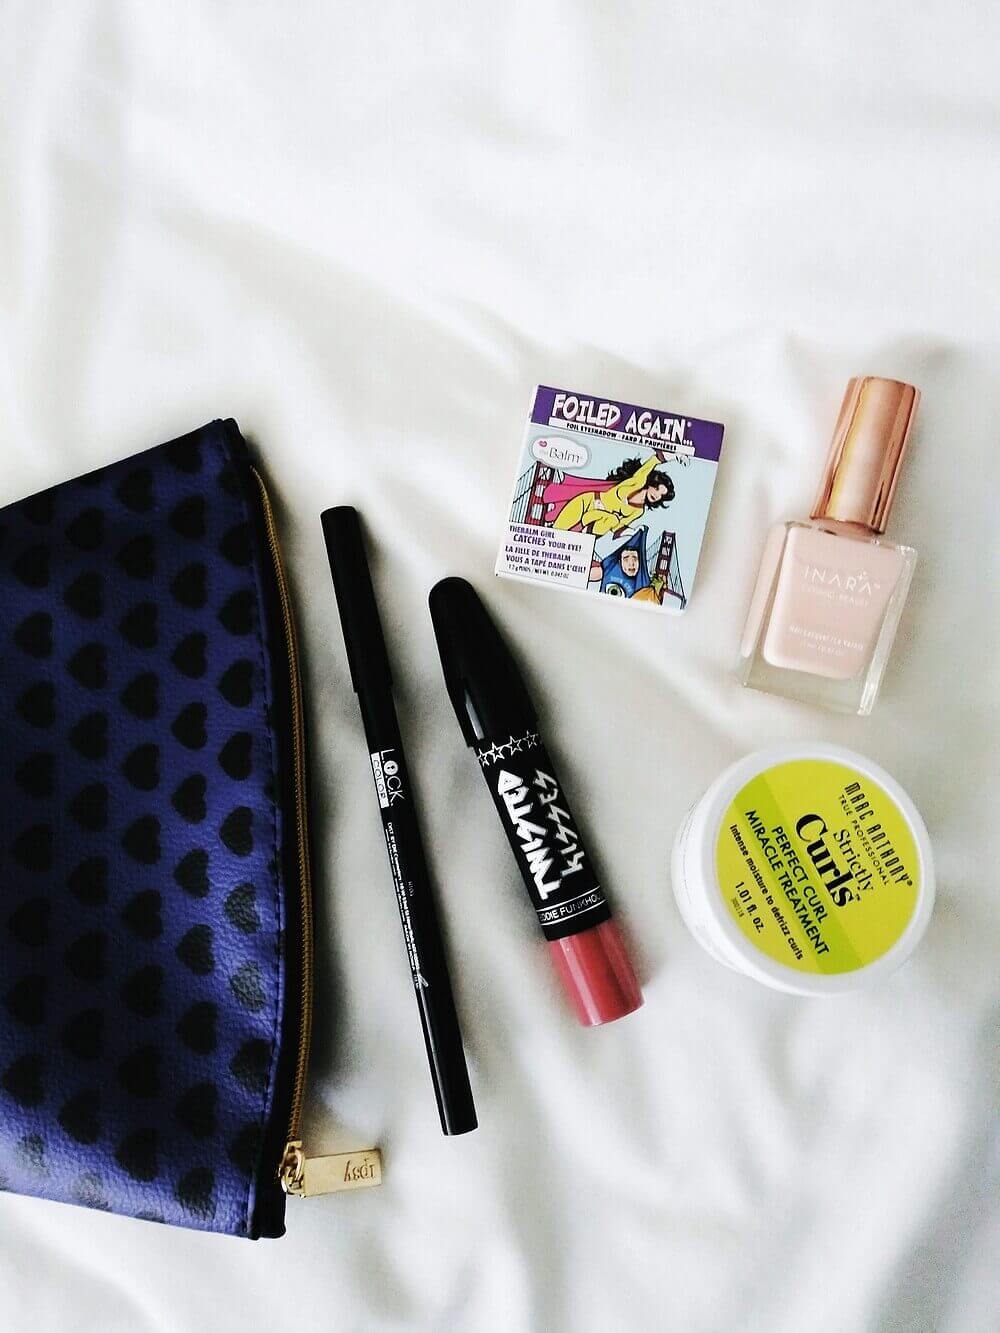 Cosmetic bag, four makeup items, one hair item